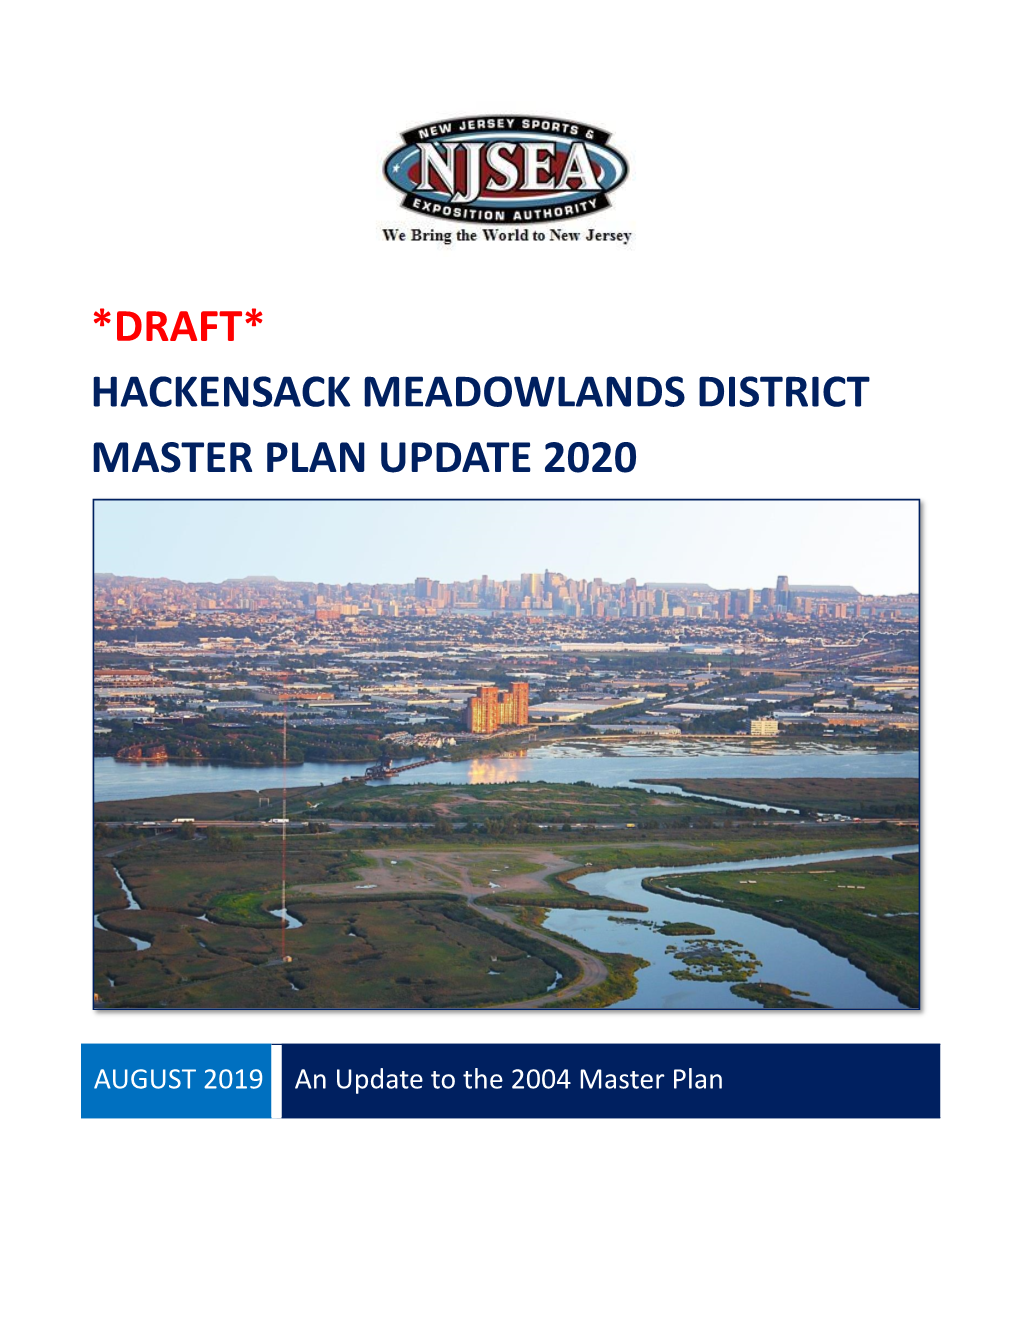 Draft* Hackensack Meadowlands District Master Plan Update 2020